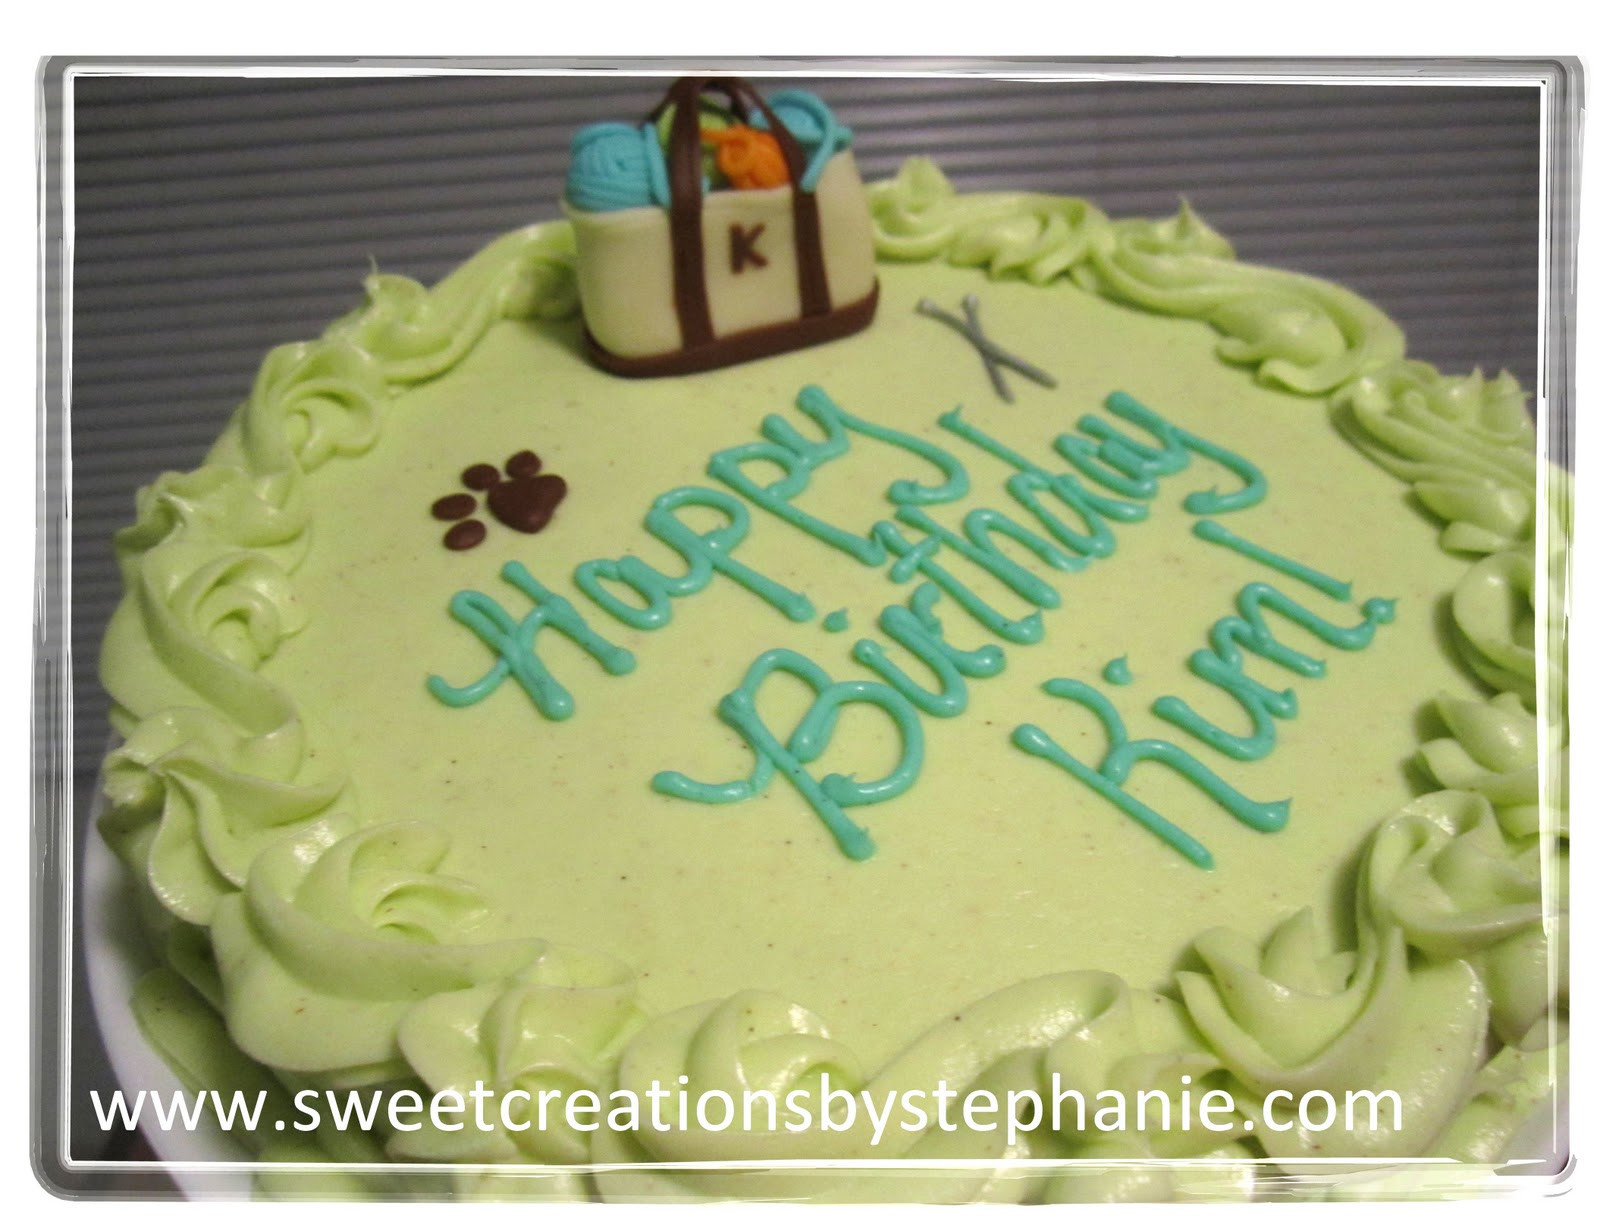 Best ideas about Happy Birthday Kim Cake
. Save or Pin Happy Birthday Kim Now.